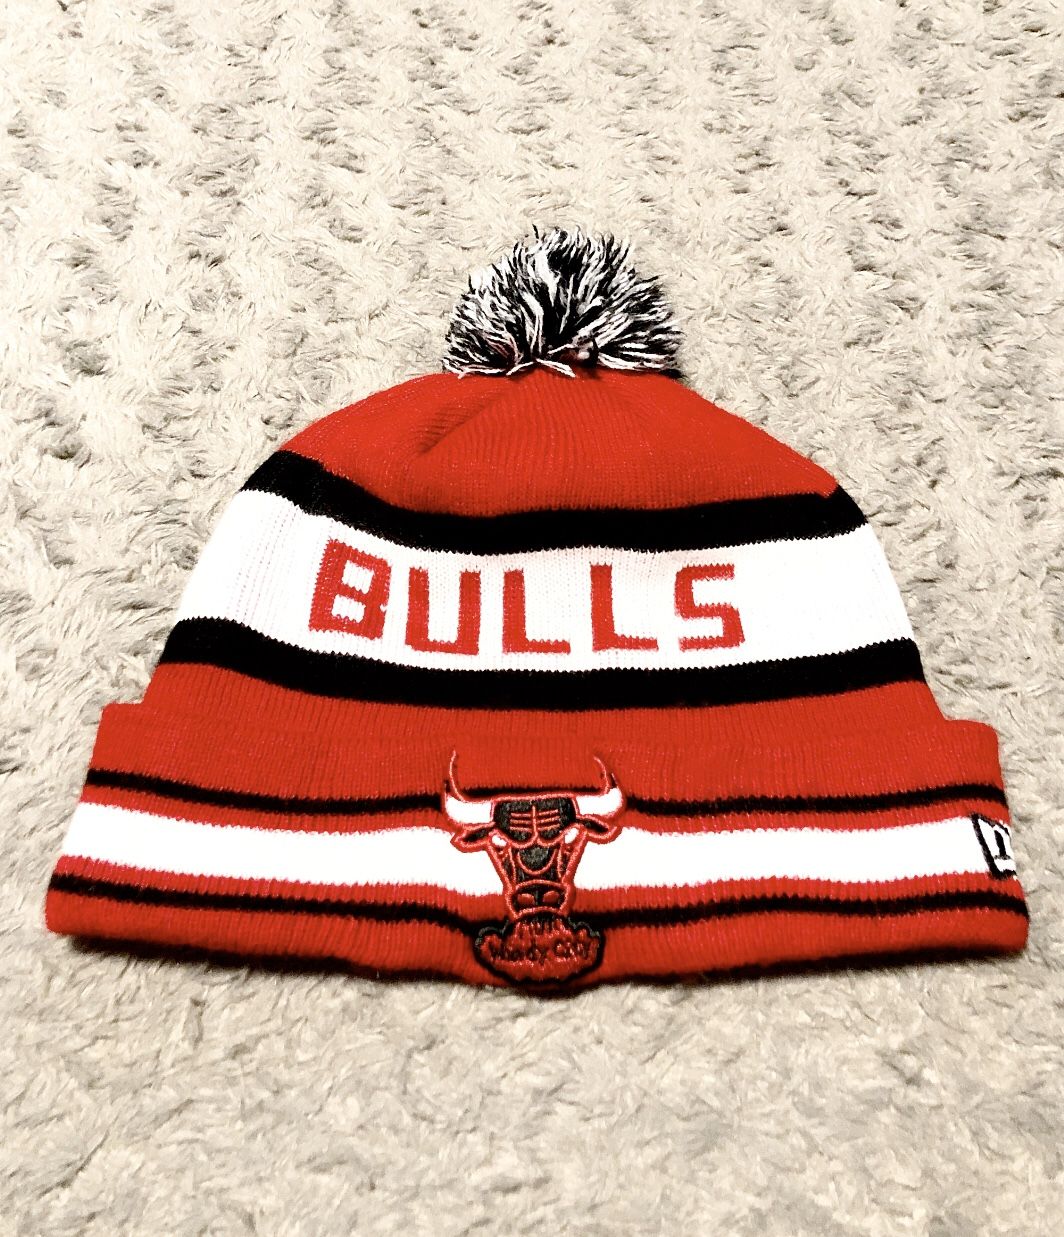 Mens New Era Bulls beanie hat paid $35 Vintage great condition! Chicago Bulls Beanie Hats Pom Winter Knit Caps New Era NBA